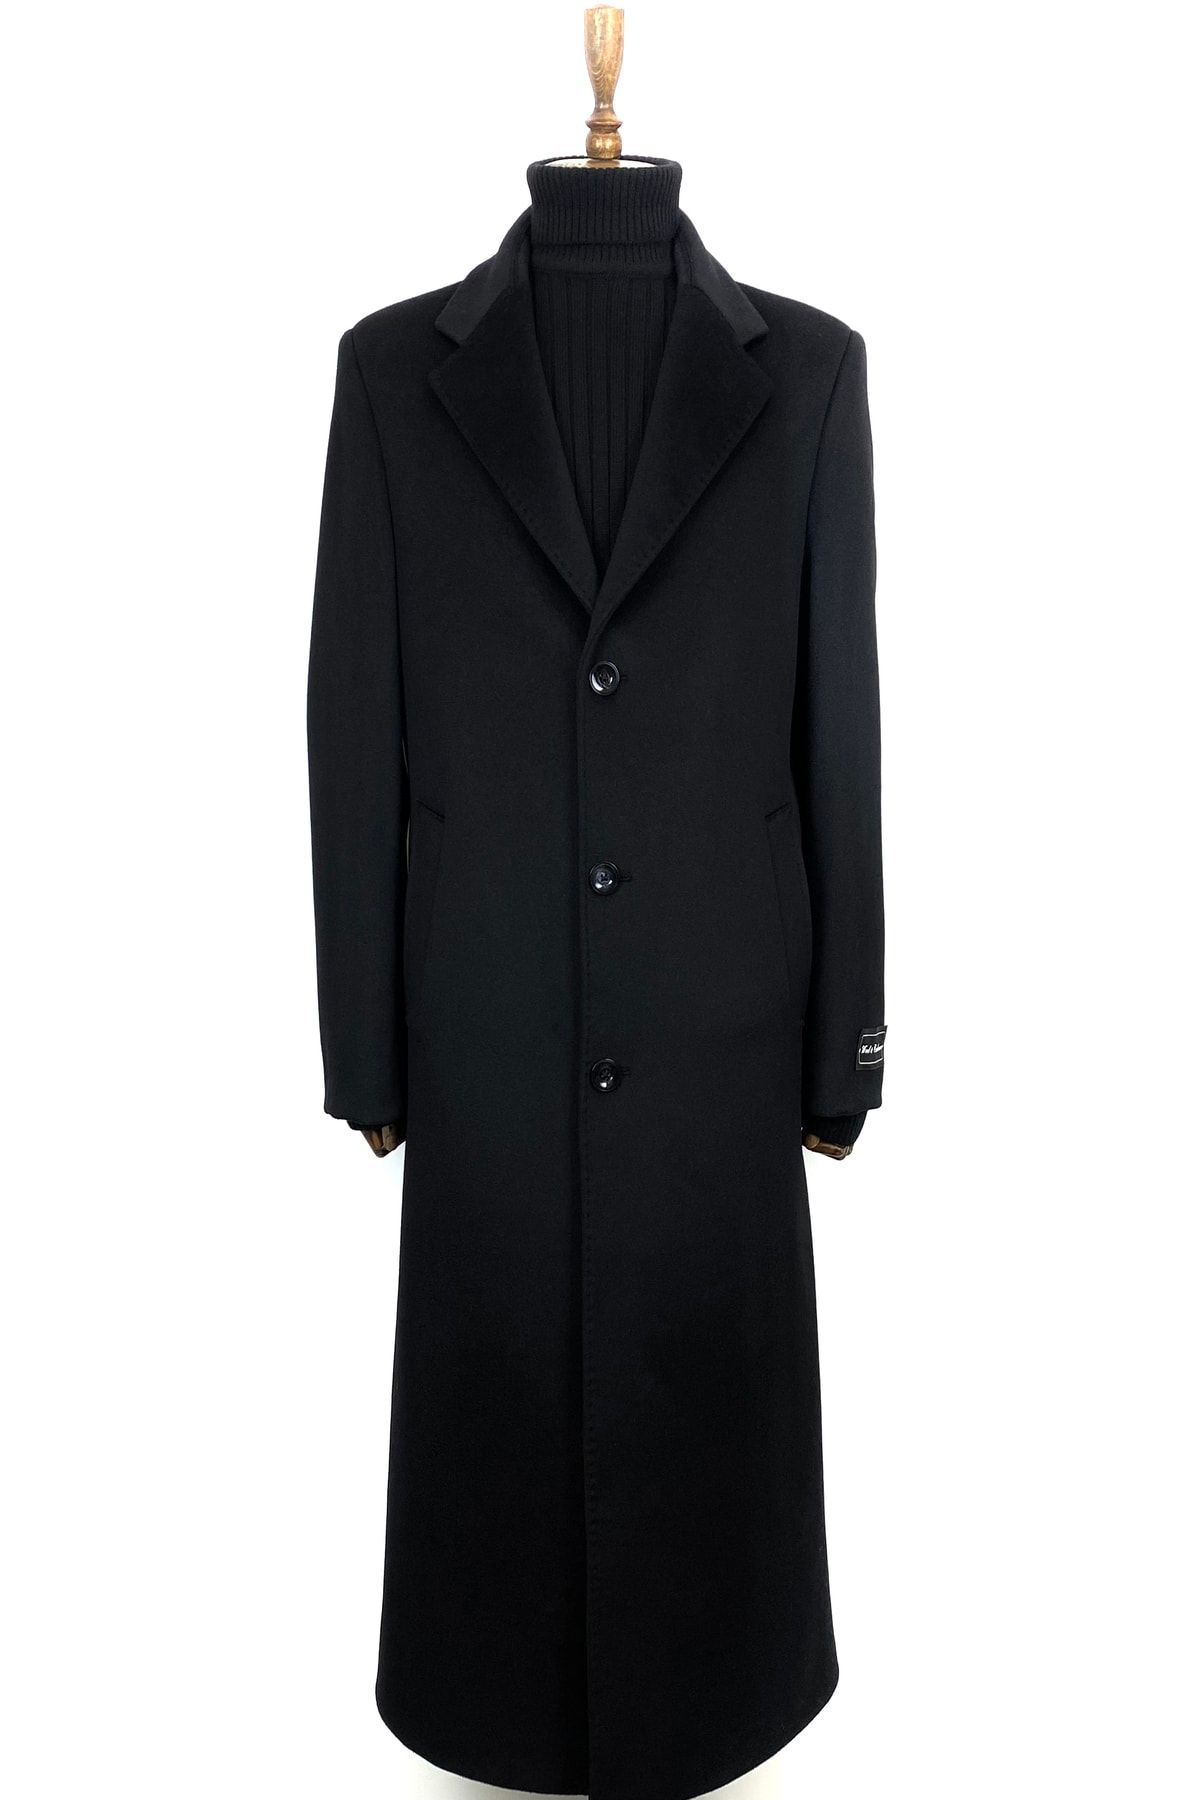 ŞAN GİYİM 1080 Erkek Spesiyal Siyah Ceket Yaka Uzun Palto